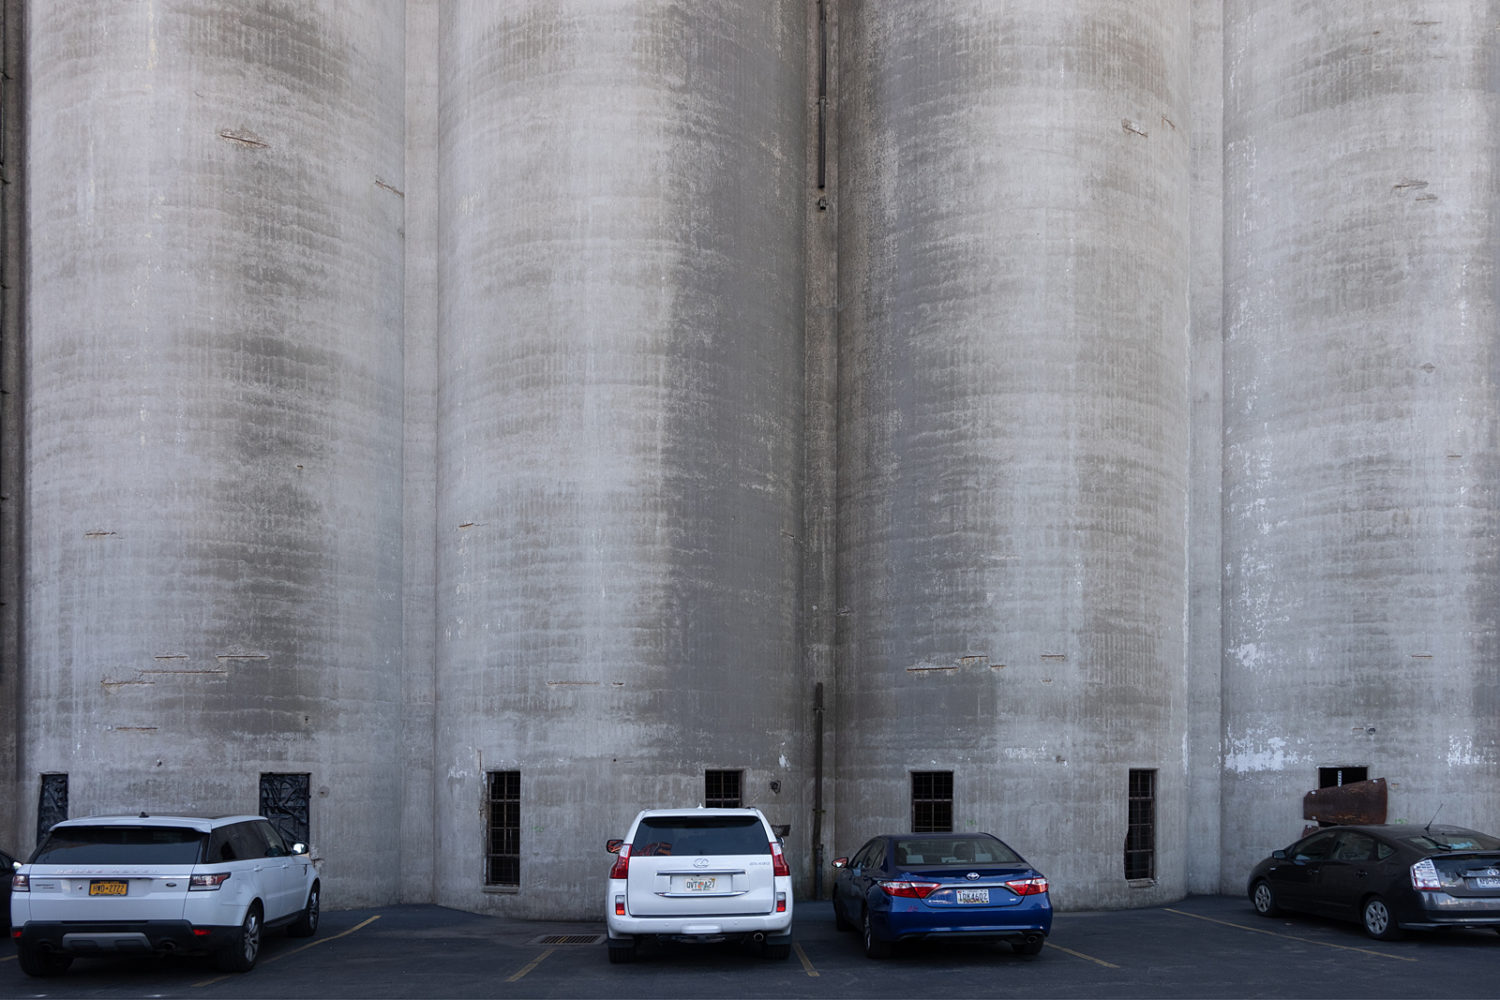 Grain silos in Buffalo New York